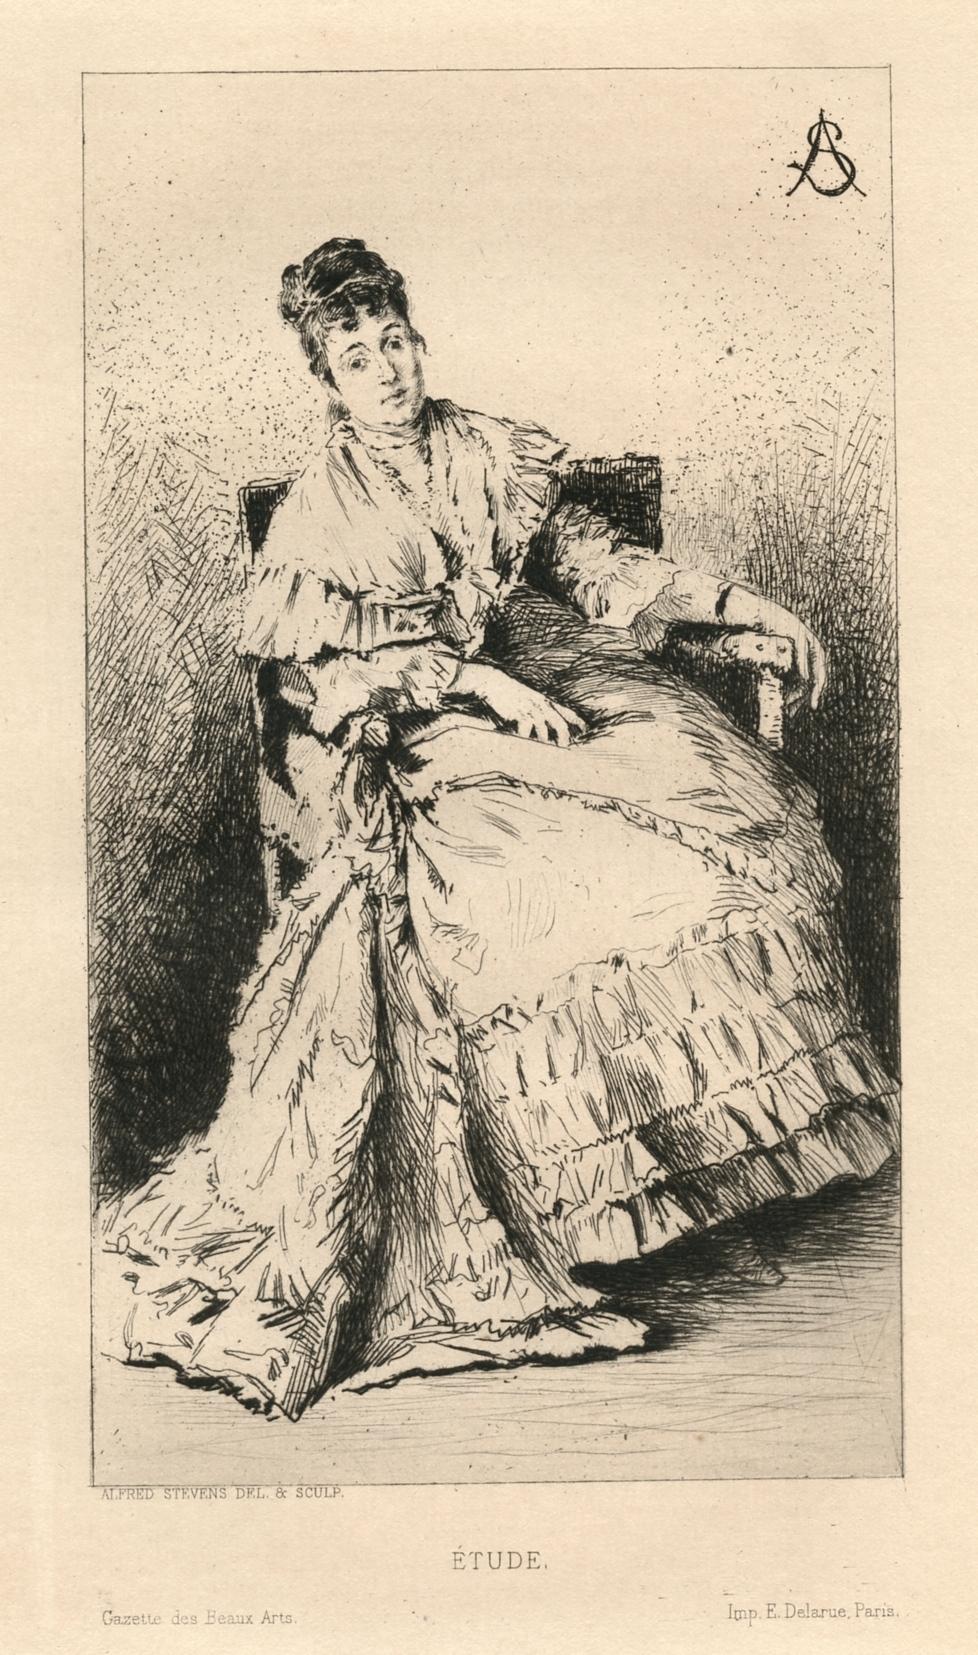 "Etude" original etching - Print by Alfred Stevens